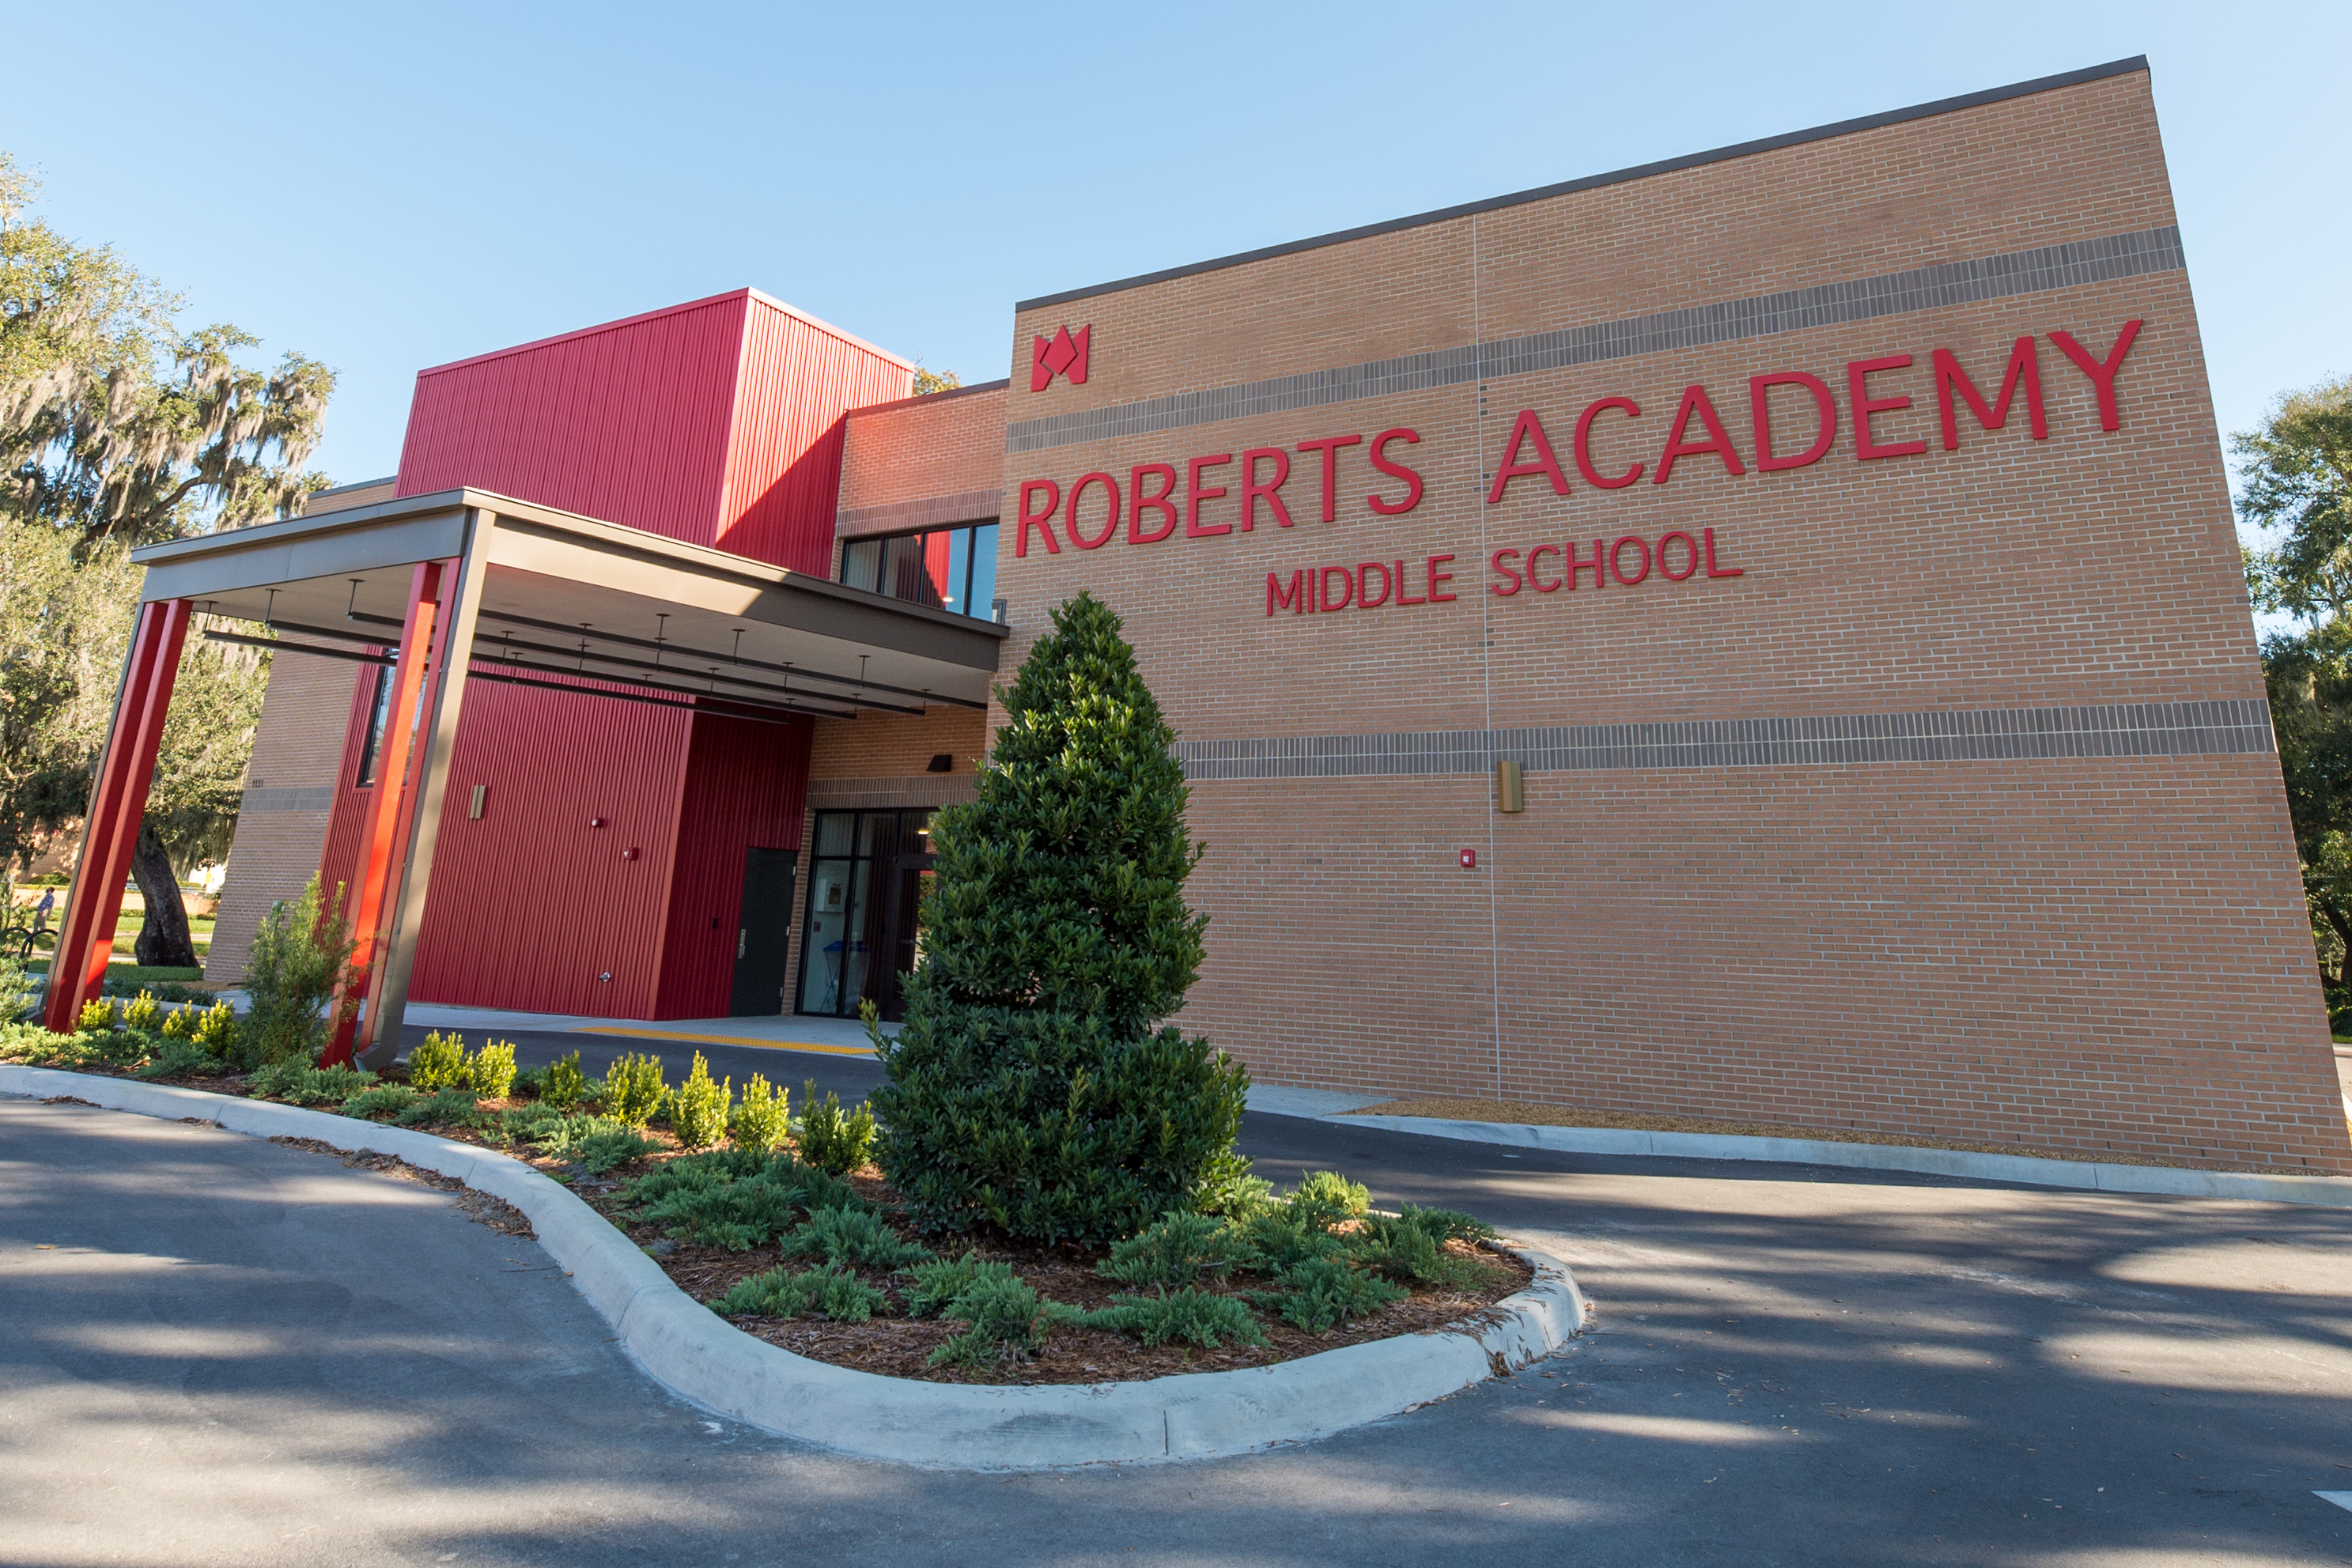 Roberts Academy Middle School